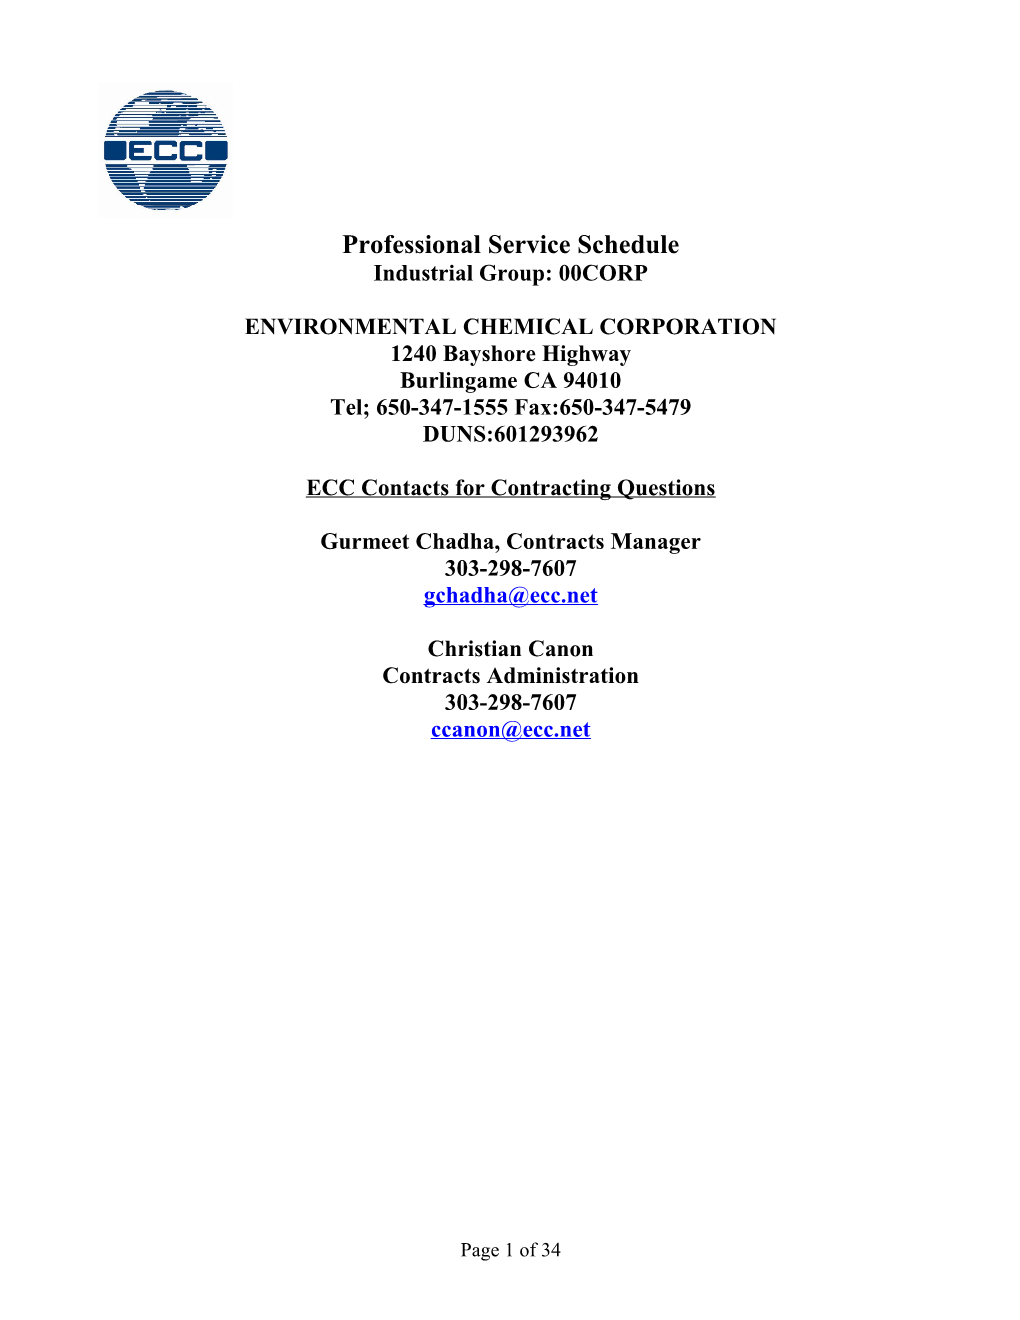 Environmental Chemical Corporation